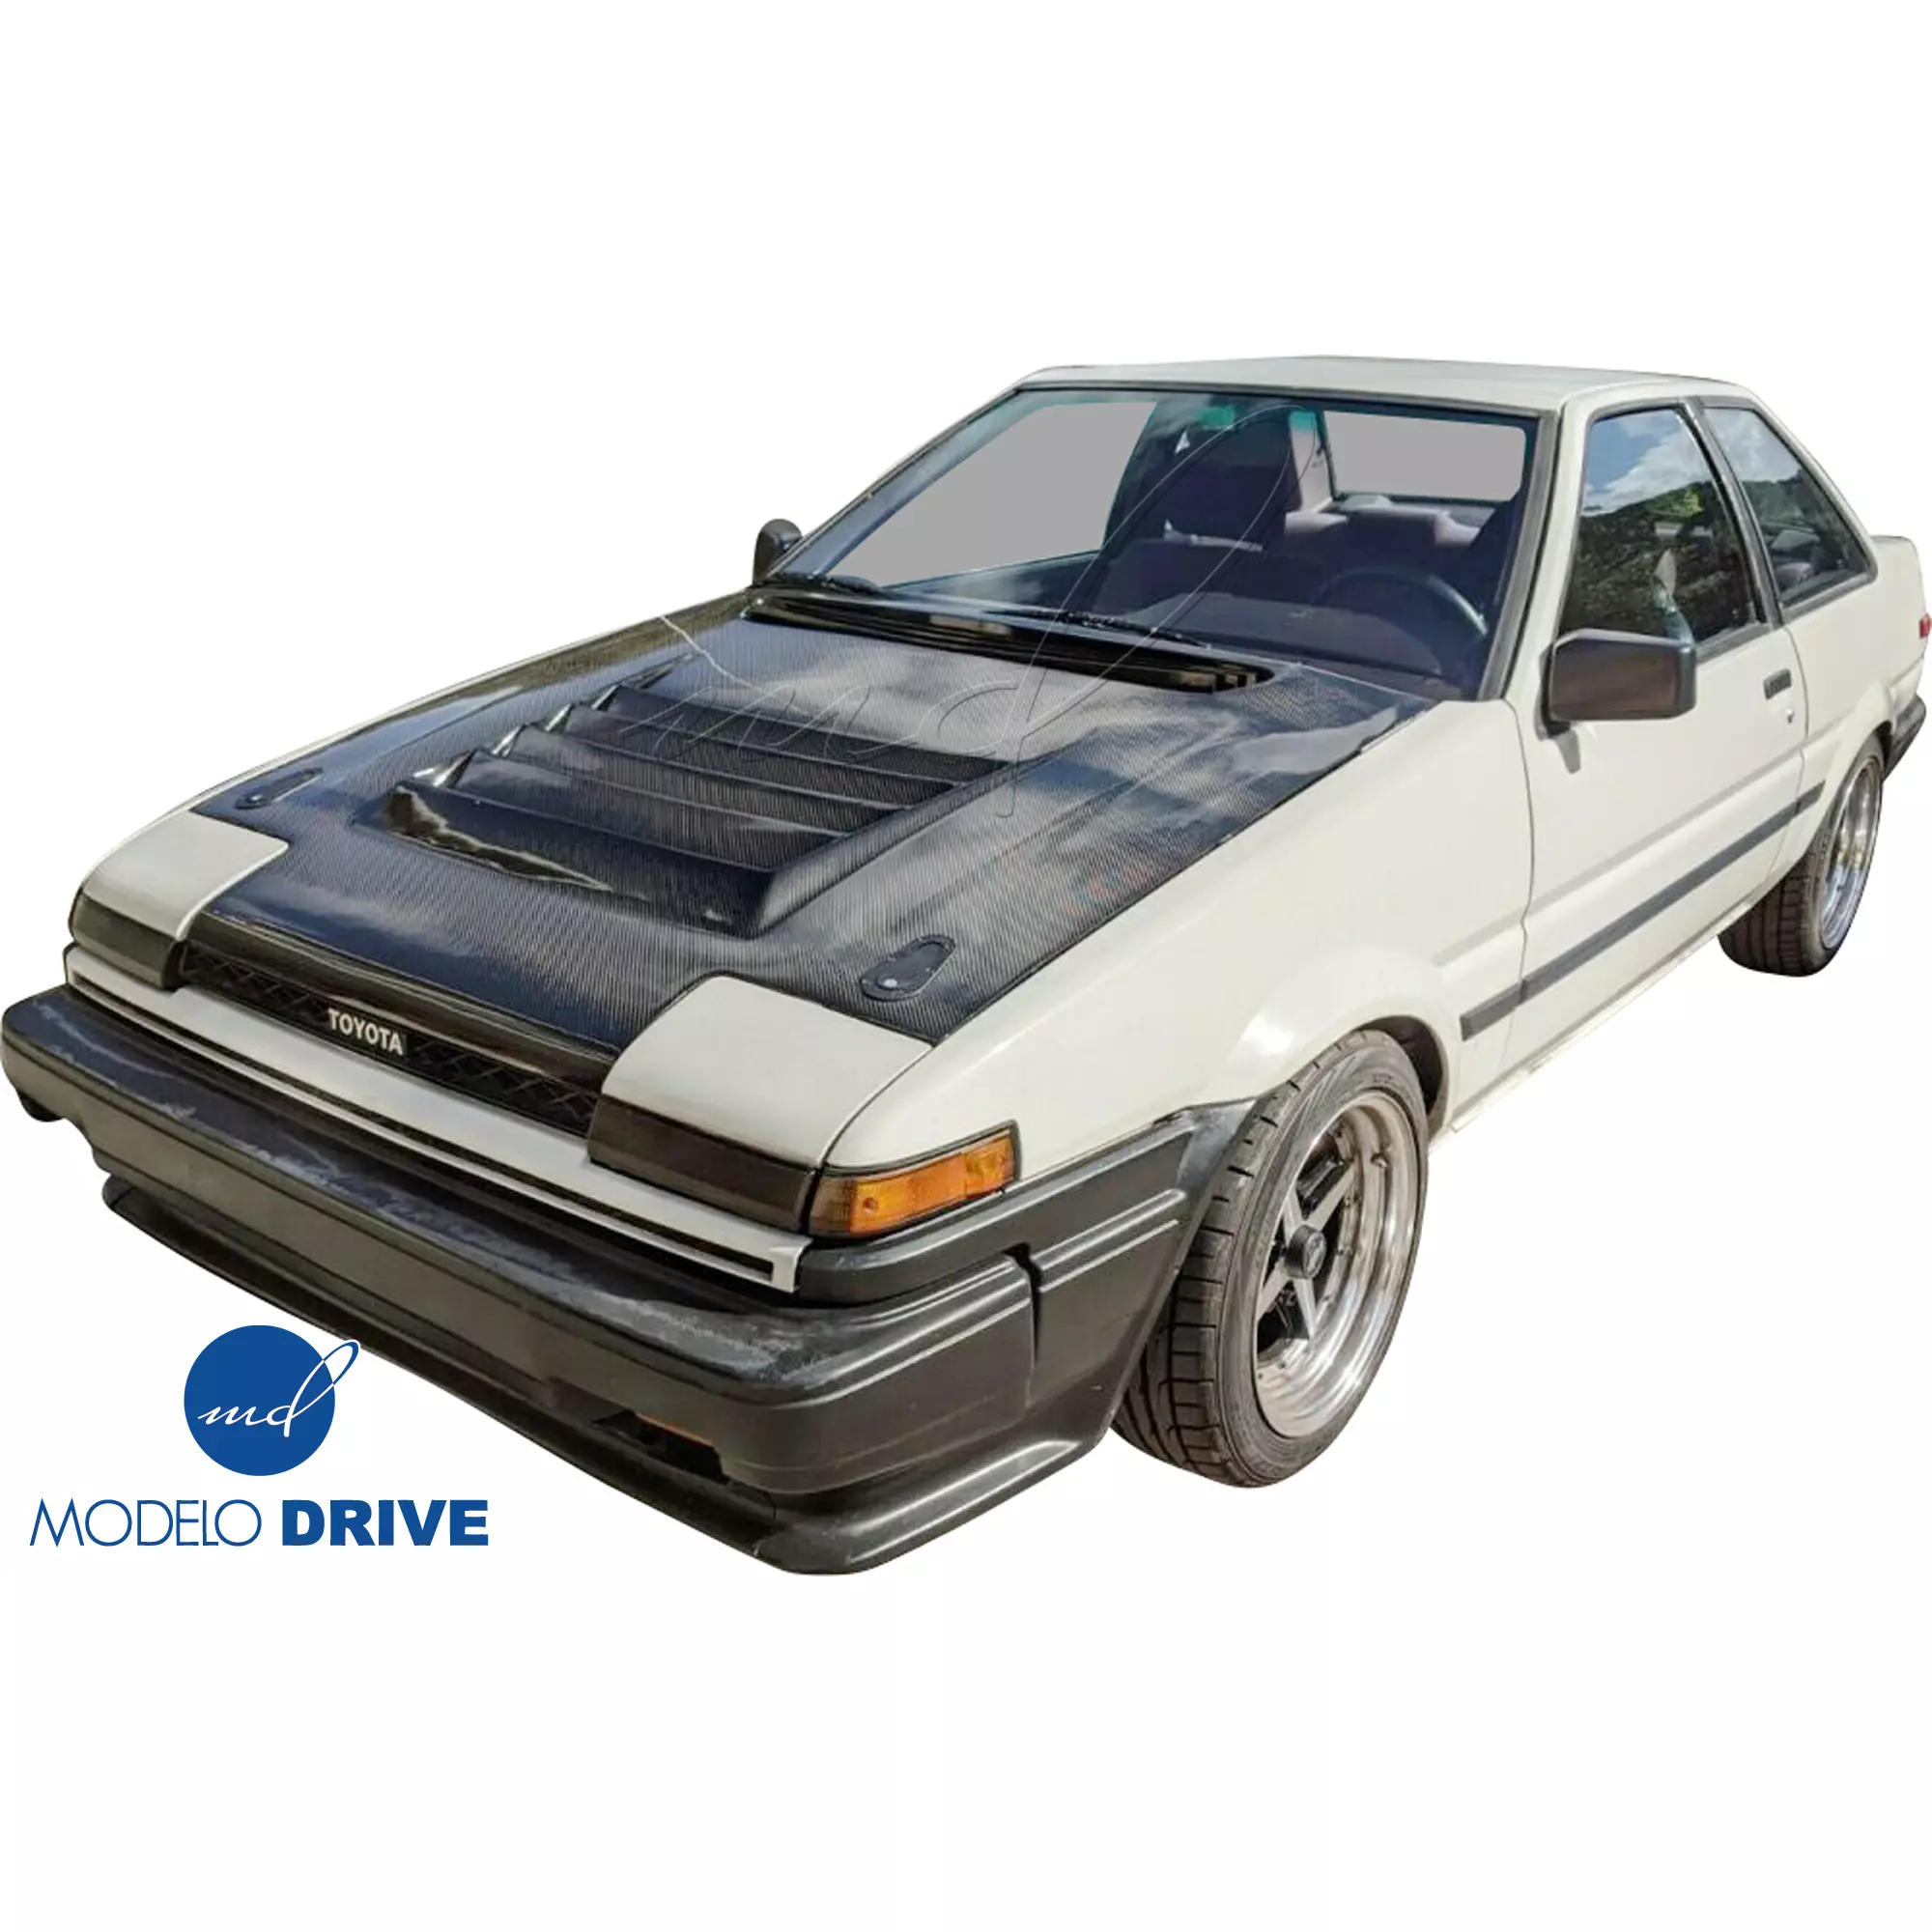 ModeloDrive Carbon Fiber DMA D1 Hood > Toyota Corolla AE86 Trueno 1984-1987 - Image 6